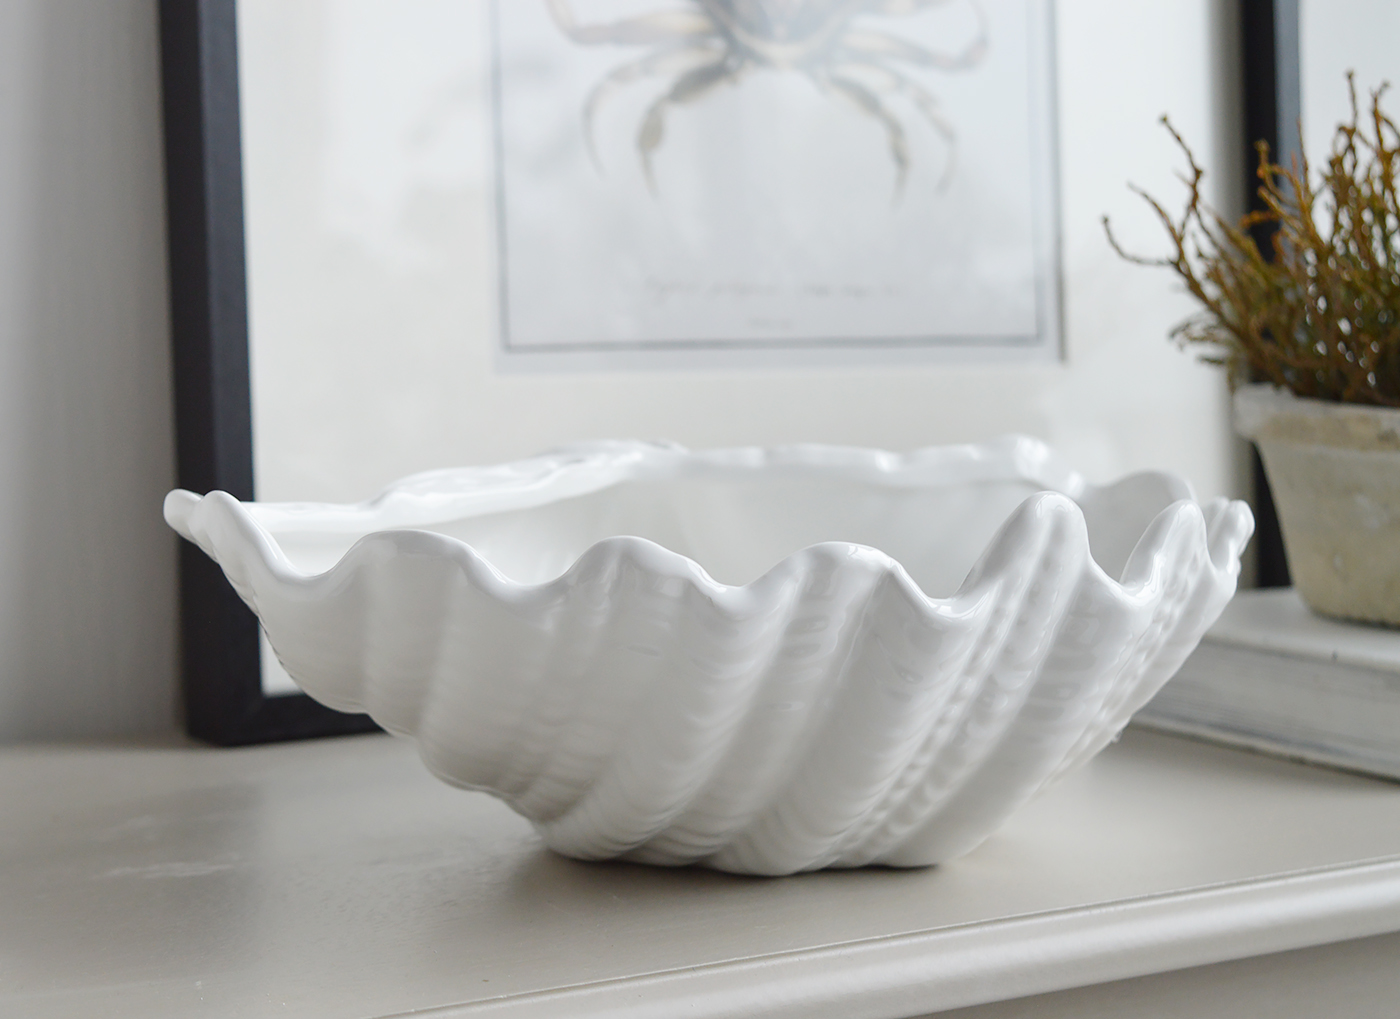 White Ceramic Clam Dish - Hamptons Coastal Console Table Styling and Decor